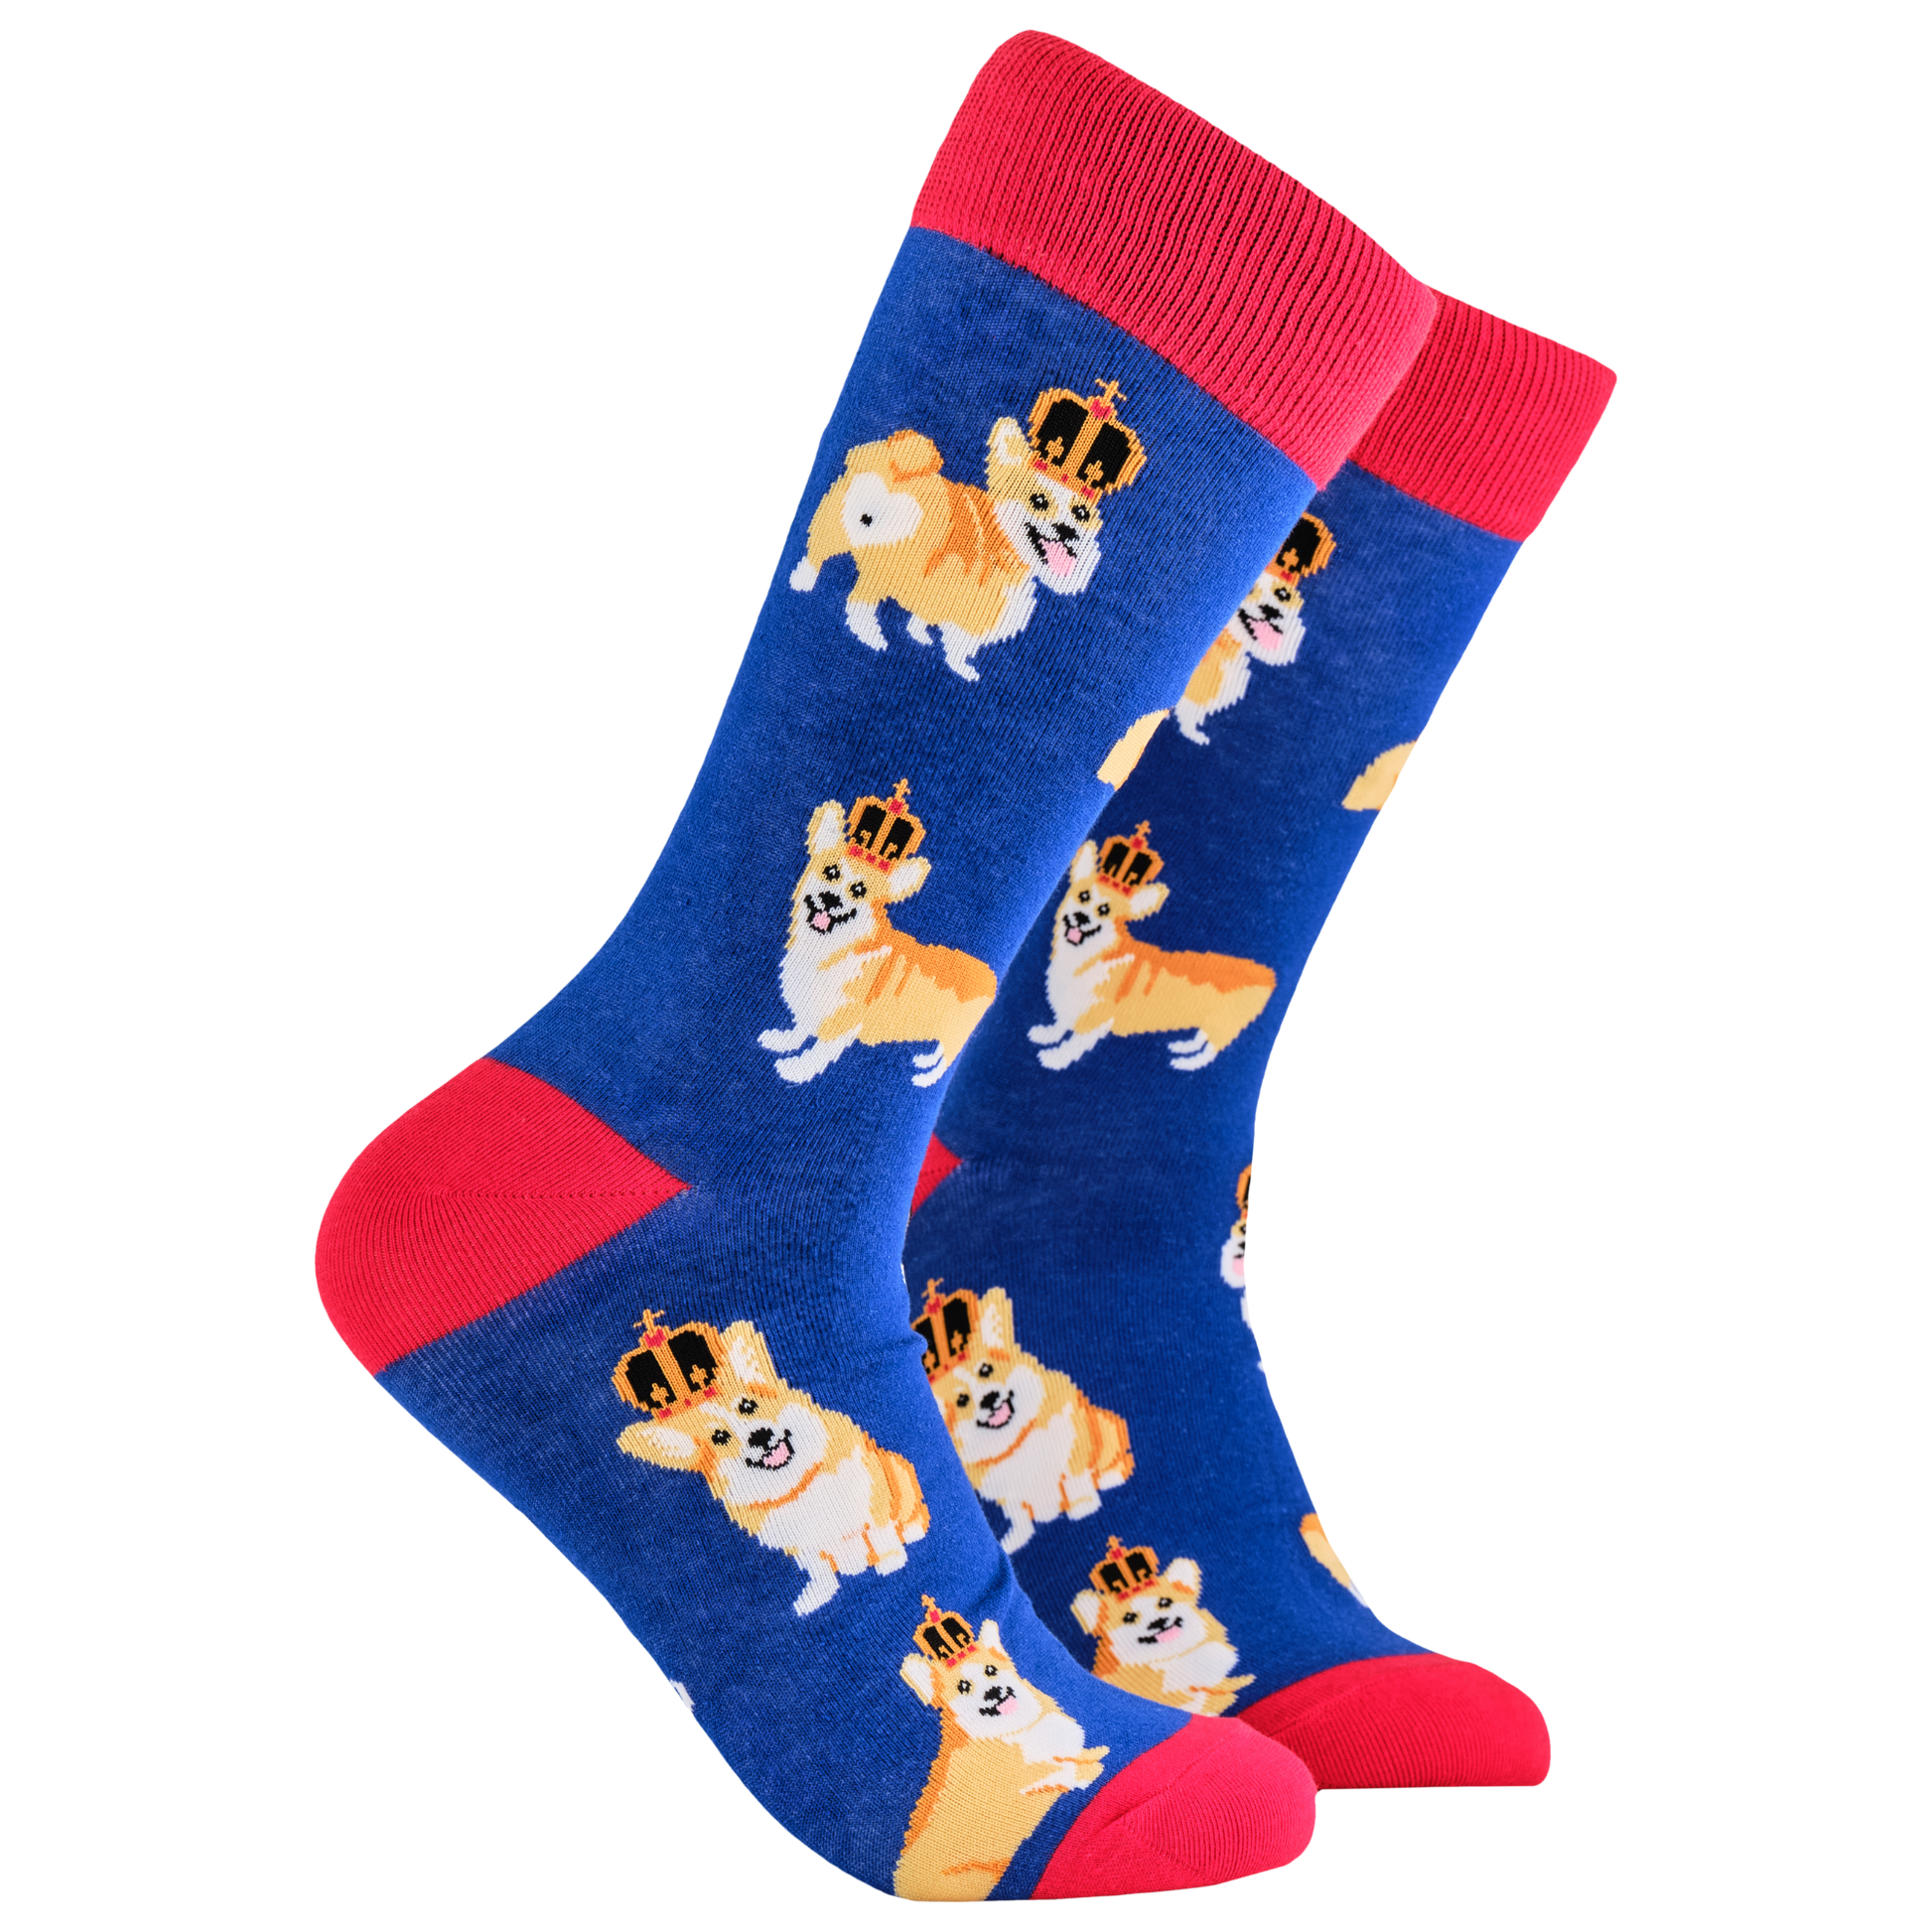 Majestic Corgi Socks. A pair of socks depicting corgis wearing crowns. Blue legs, red cuff, heel and toe.